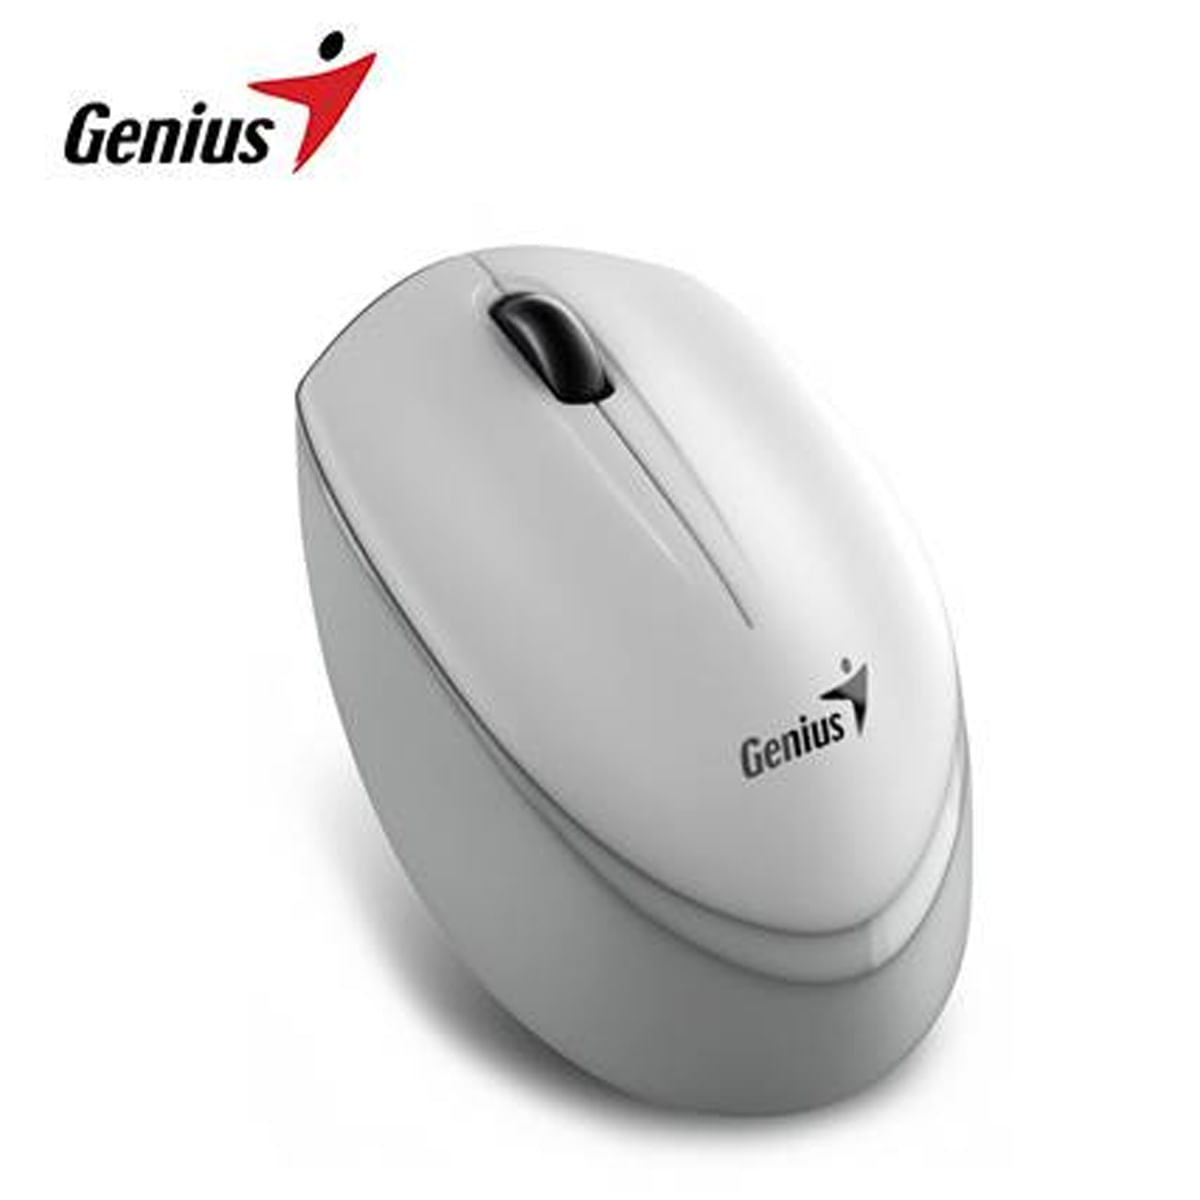 Mouse Genius Nx-7009 Wireless Ergonomico Gris / blanco